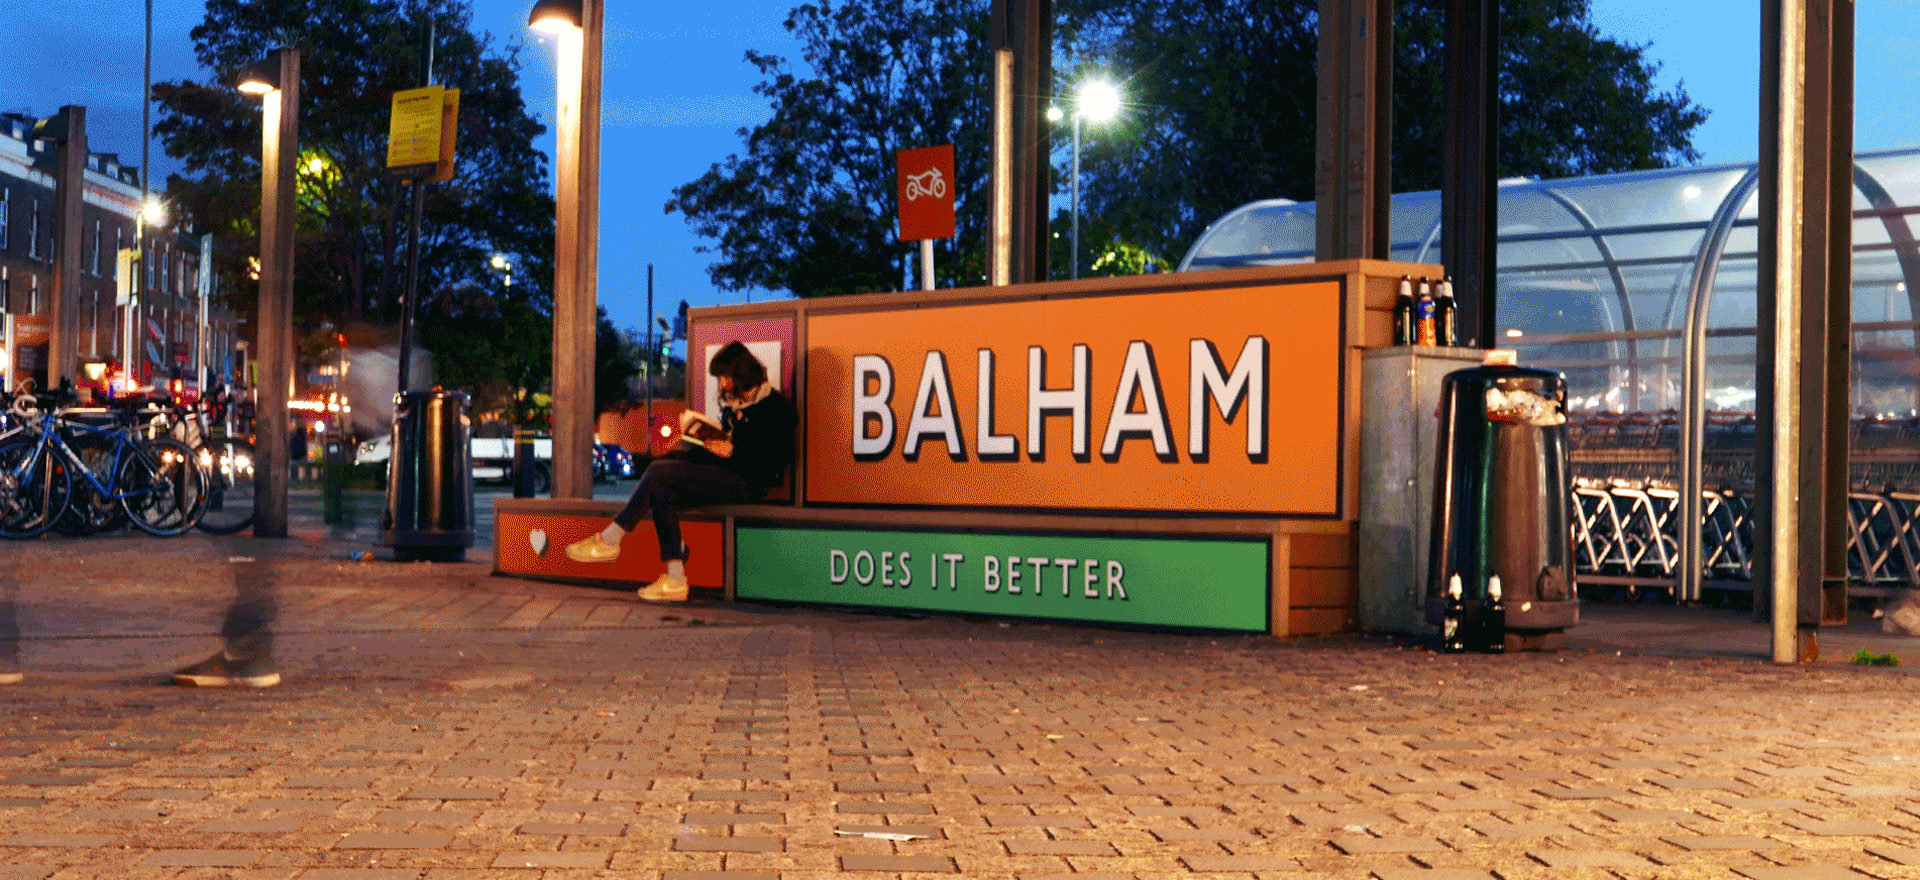 Balham Bench